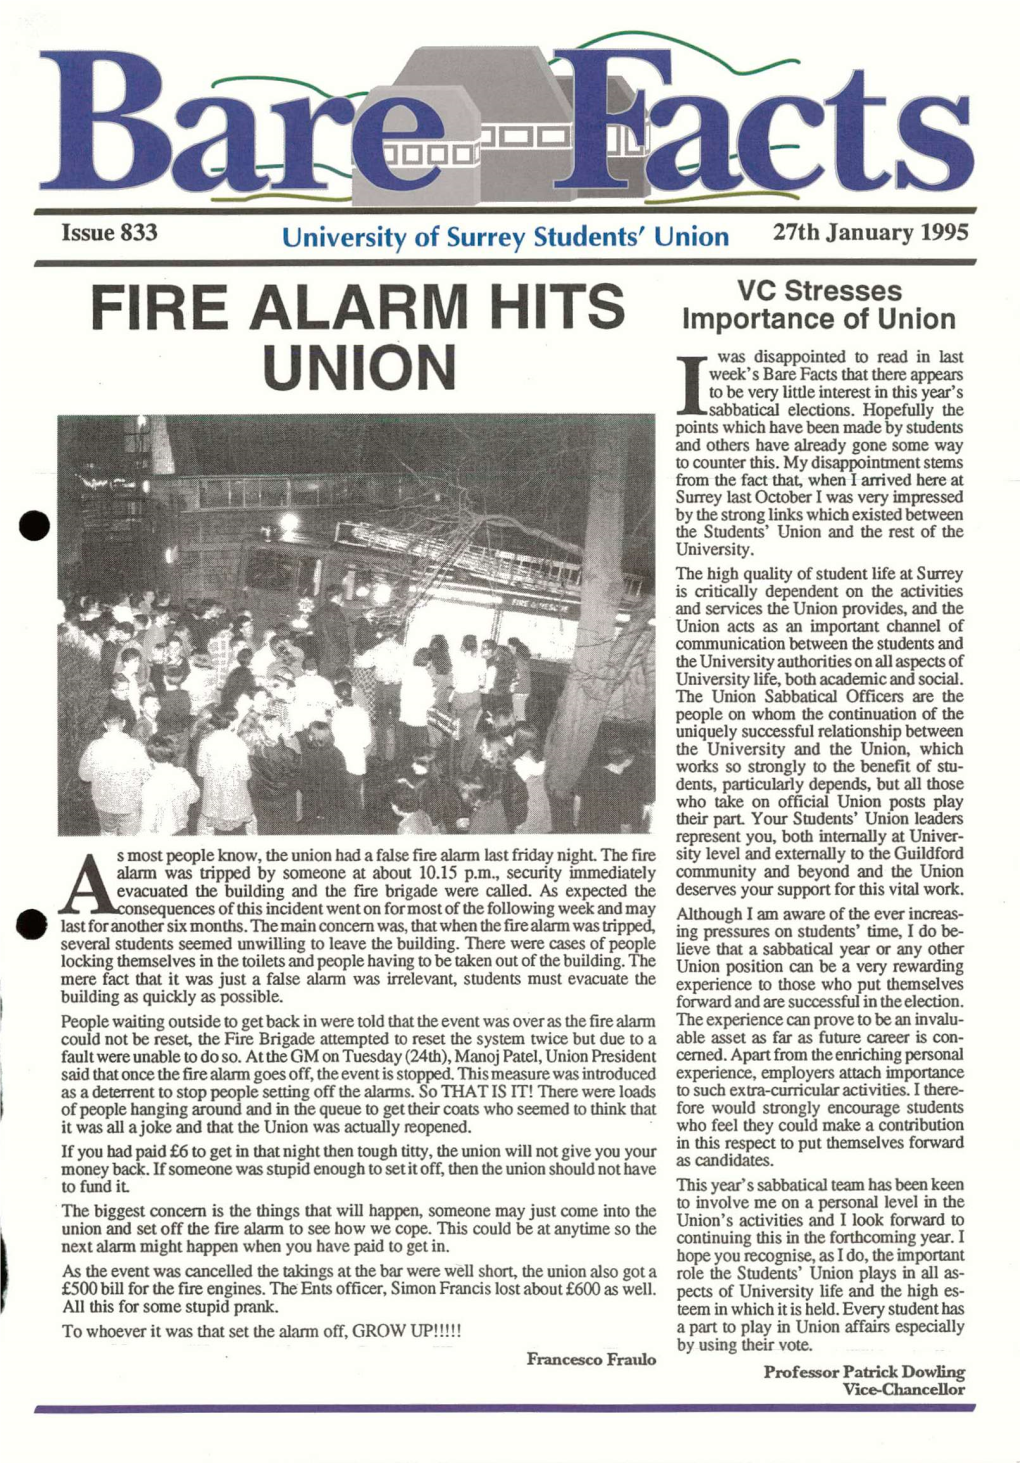 Fire Alarm Hits Union